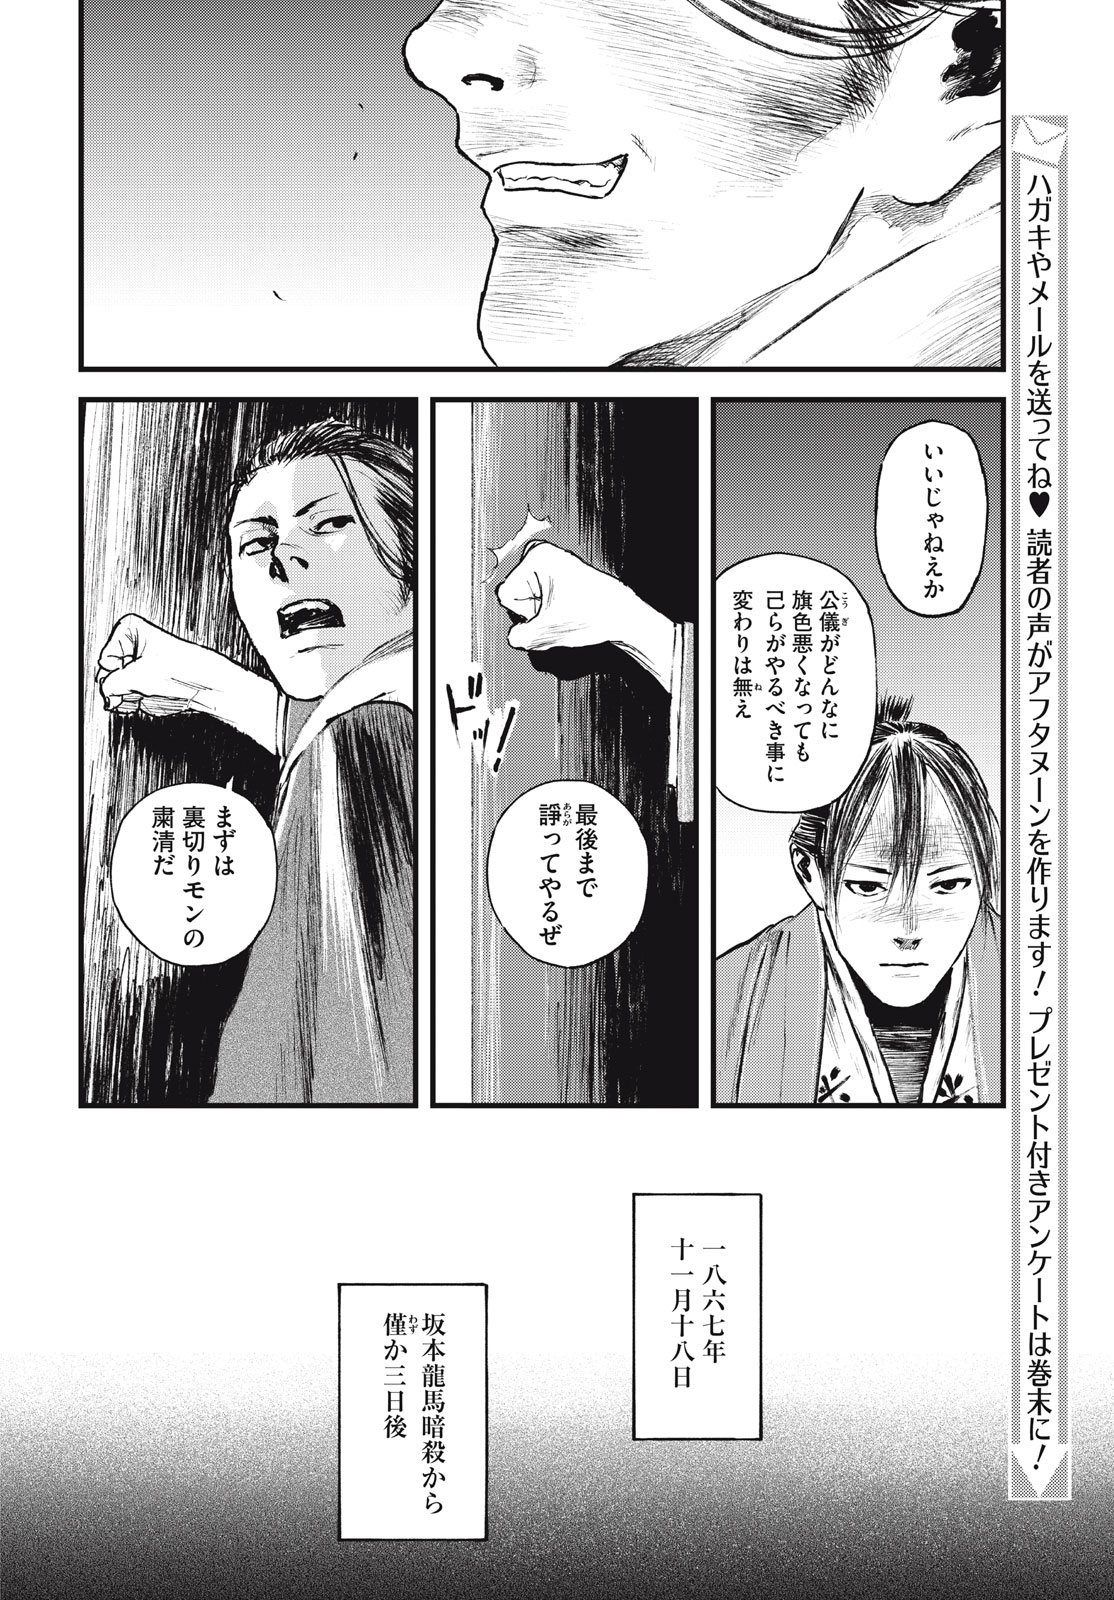 Blade of the Immortal: Bakumatsu Arc - Chapter 56 - Page 22